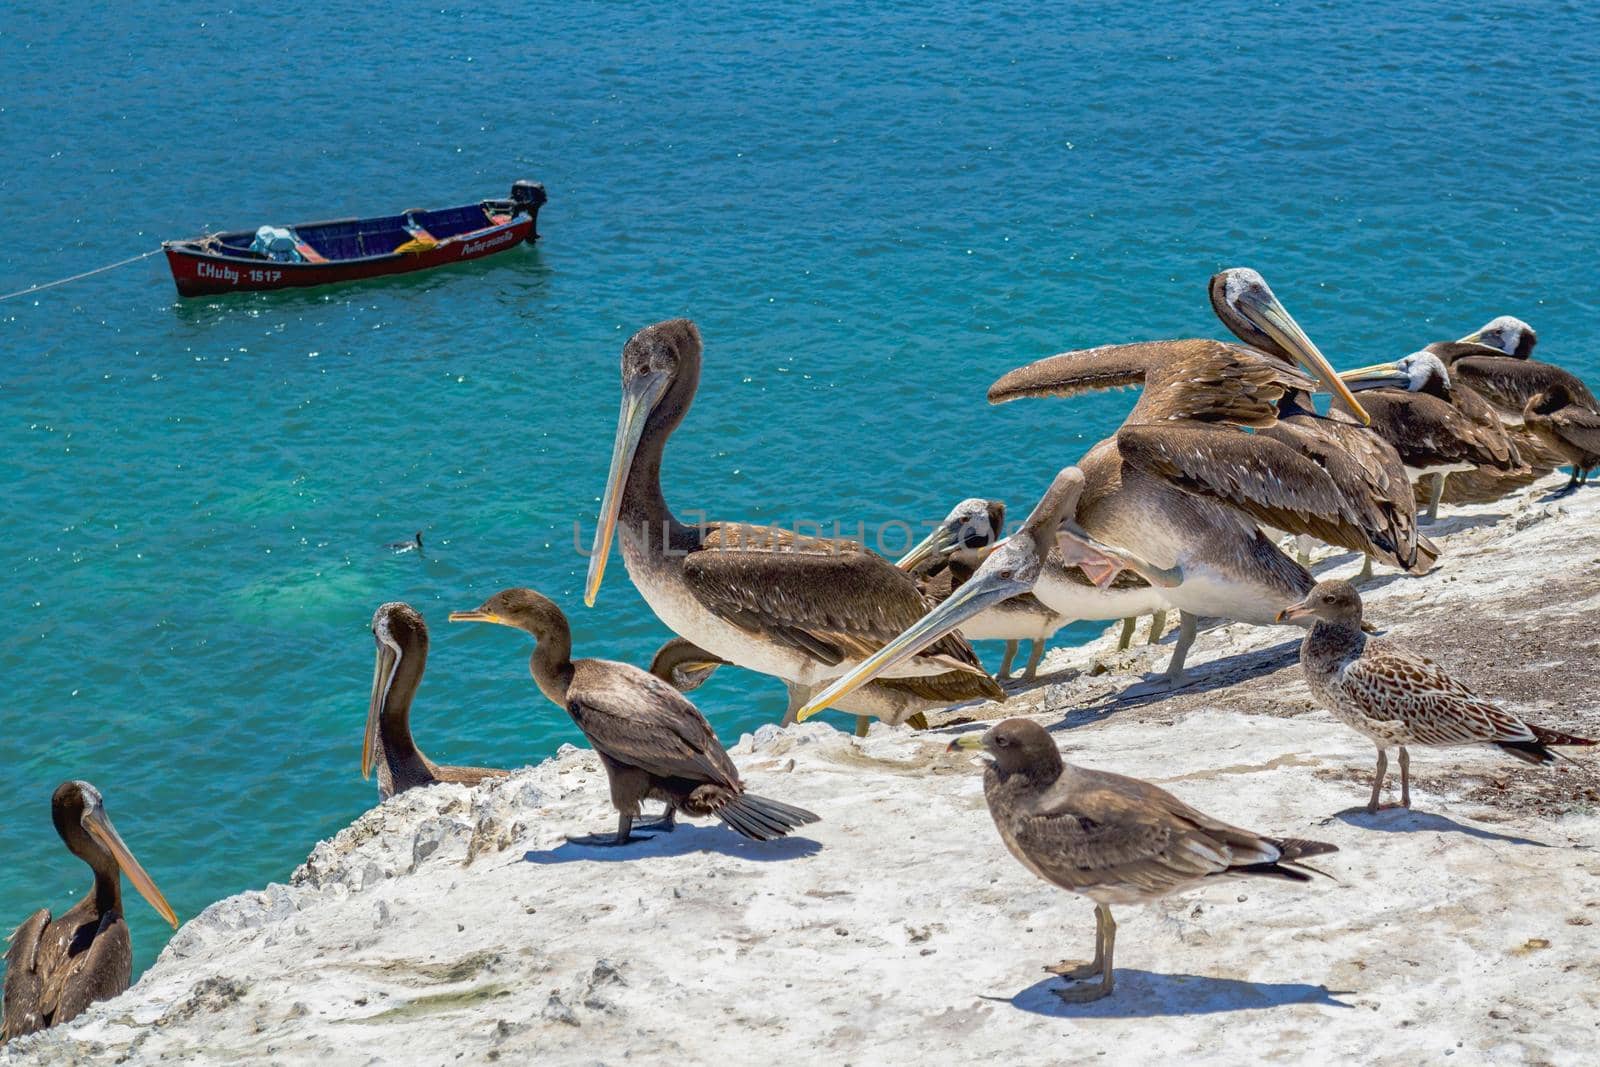 Pelicans and cormorants perched on the rocks above Juan Lopez bay, near Antofagasta, Chile by hernan_hyper